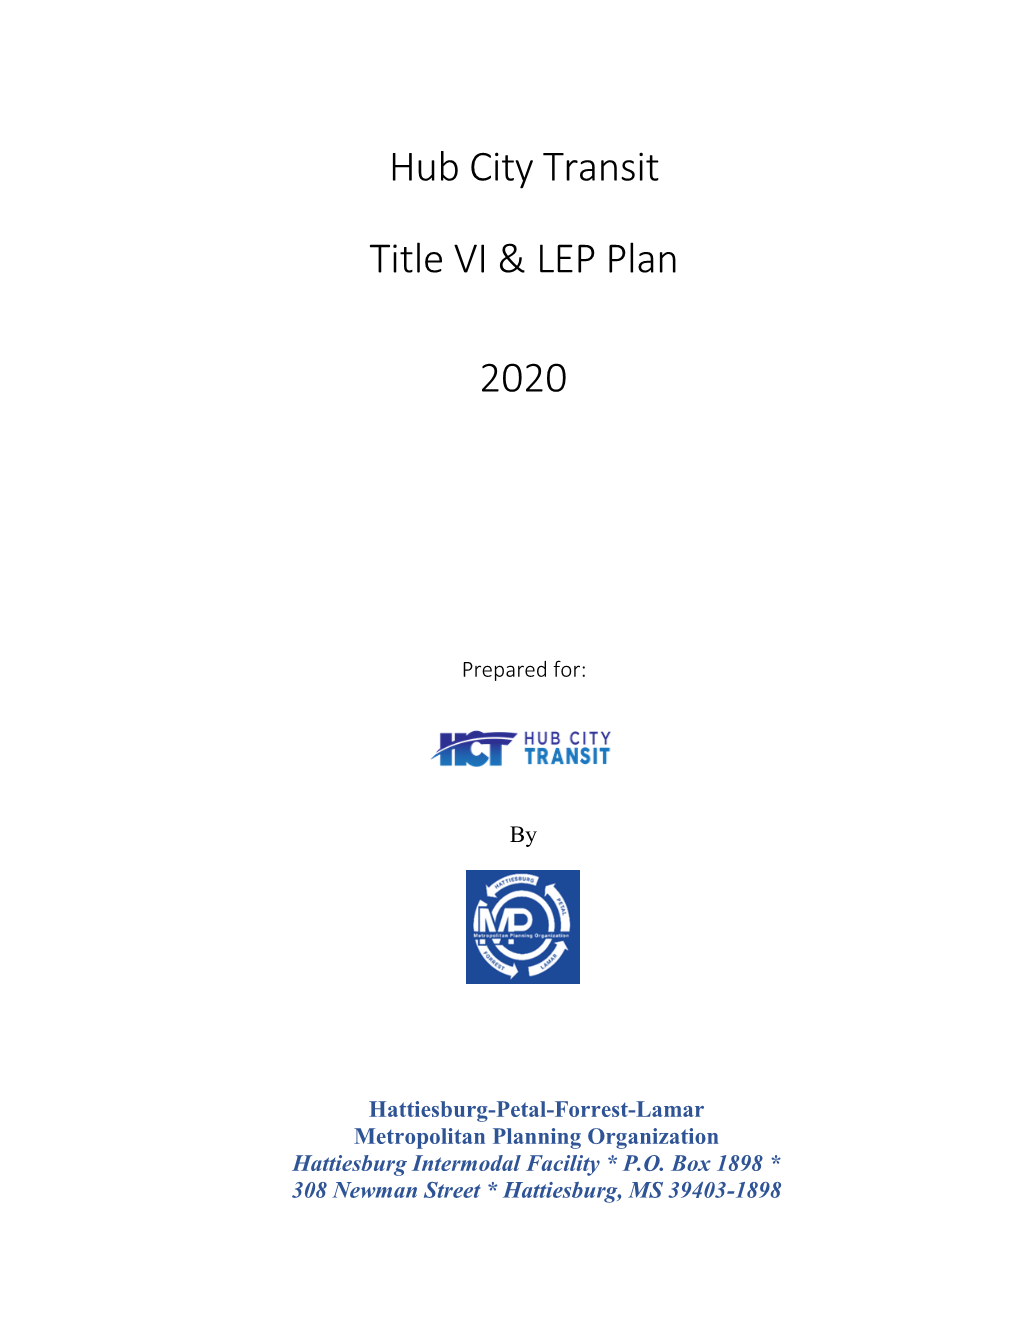 Hub City Transit Title VI & LEP Plan 2020